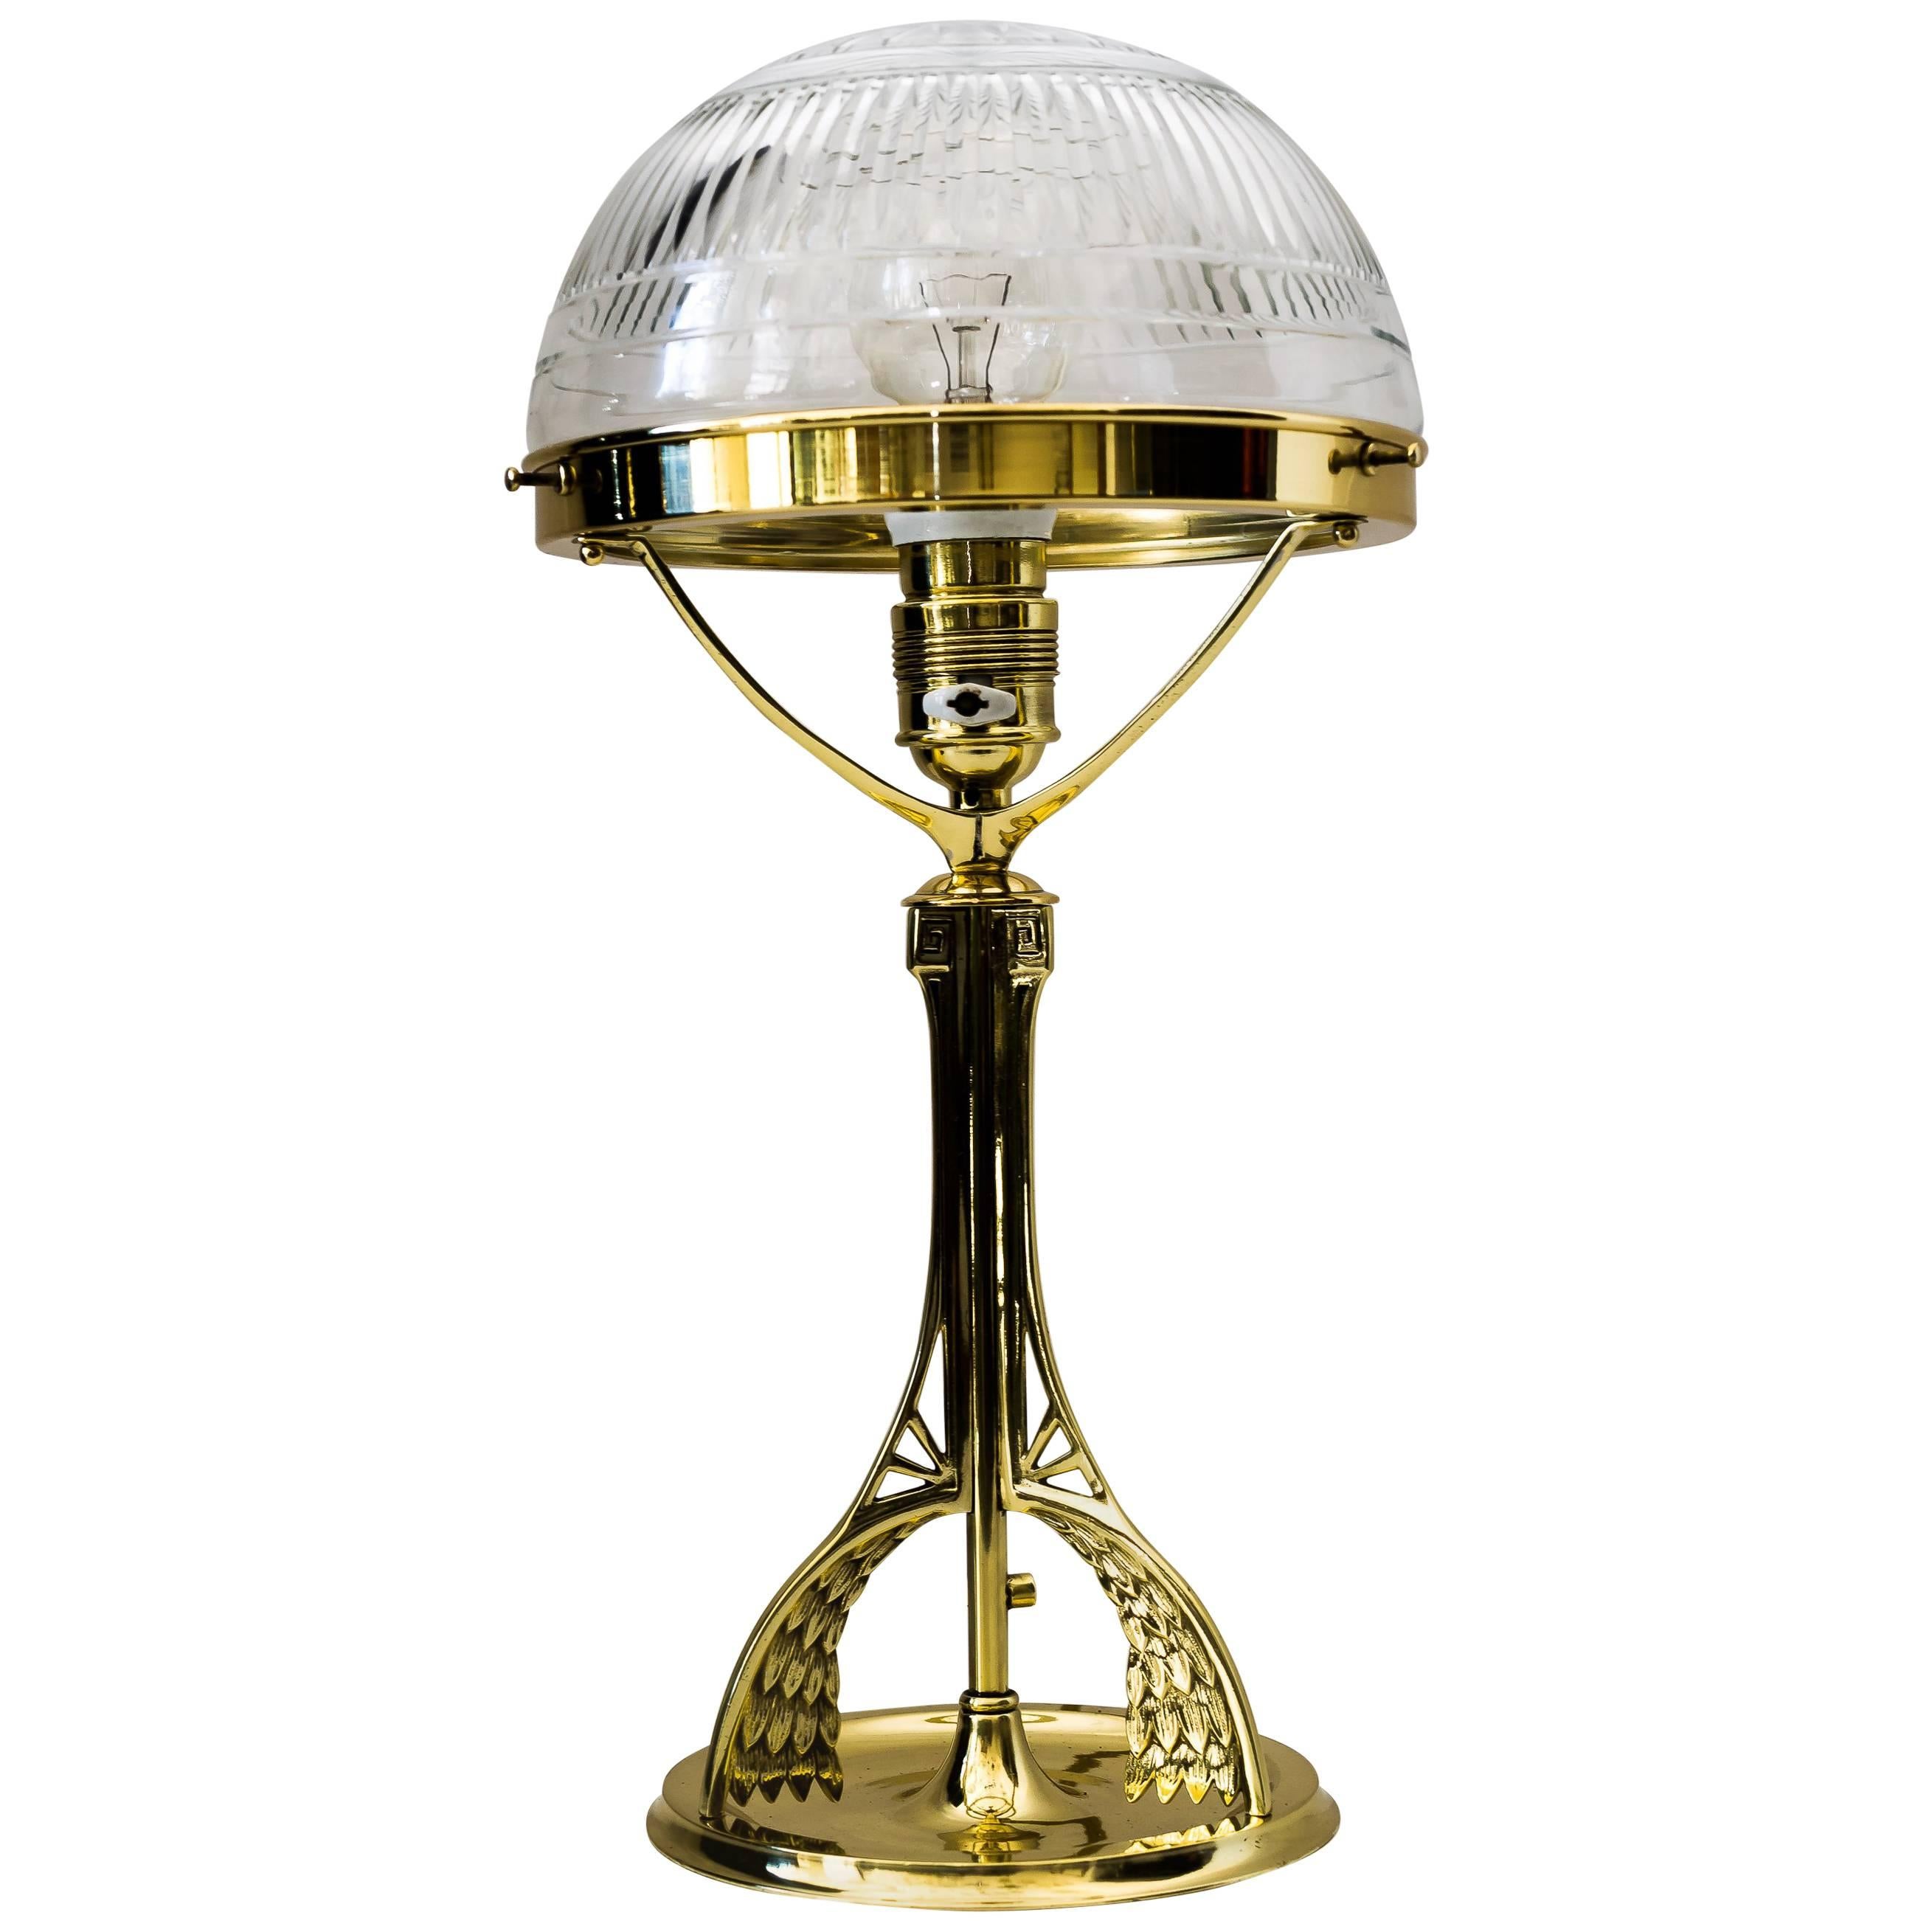 Lampe de bureau Art Nouveau avec verre taillé d'origine, vers 1908 en vente